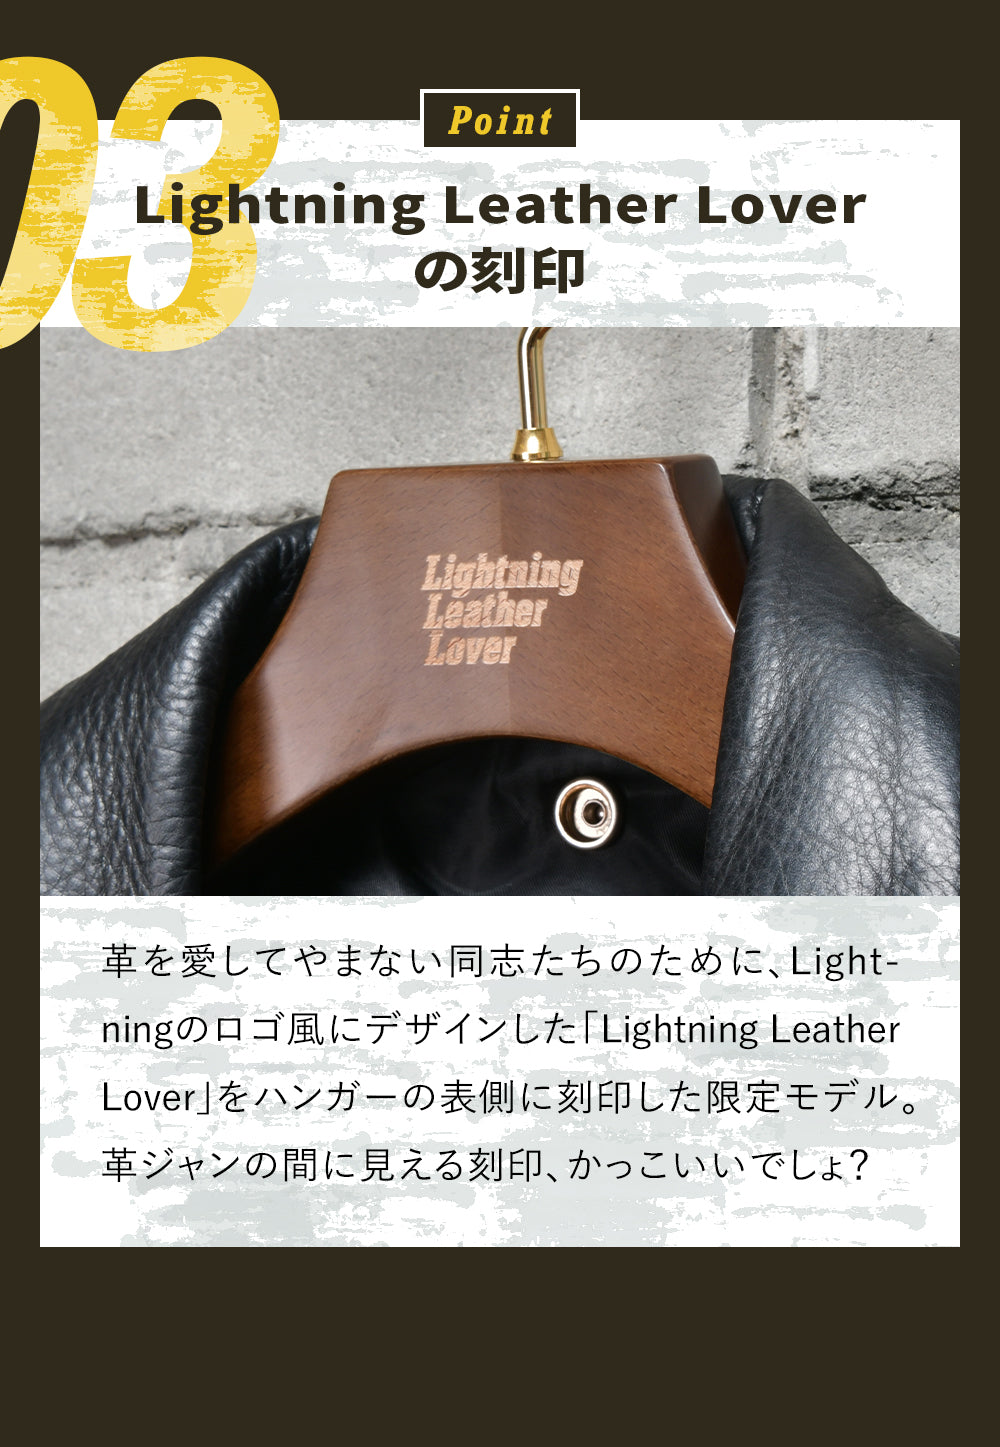 Leather Lover Hanger、ポイント、刻印、限定モデル